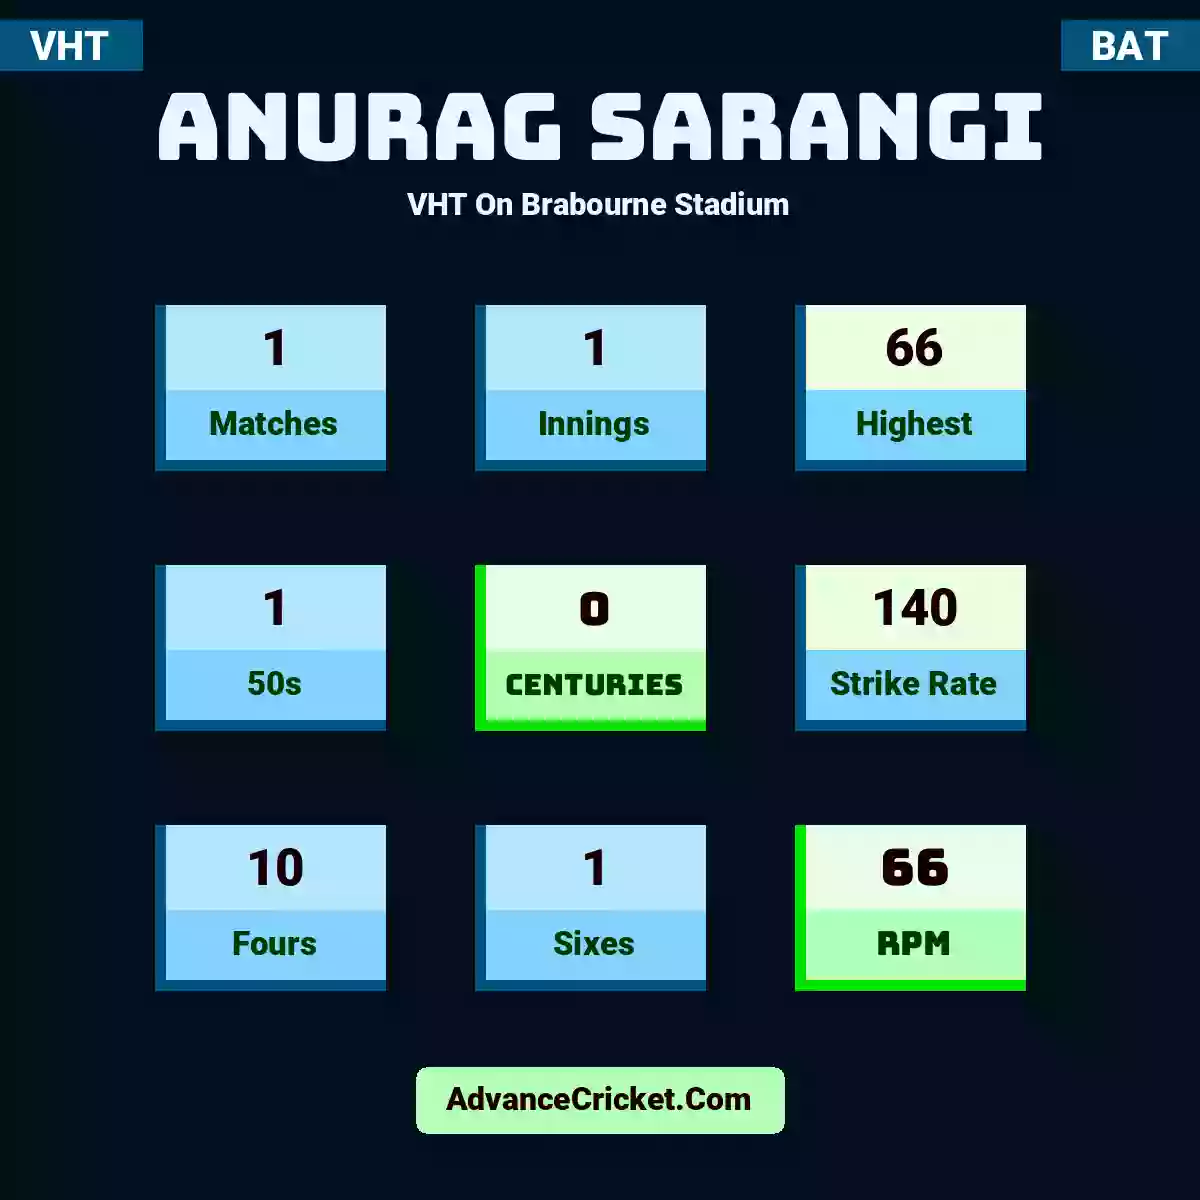 Anurag Sarangi VHT  On Brabourne Stadium, Anurag Sarangi played 1 matches, scored 66 runs as highest, 1 half-centuries, and 0 centuries, with a strike rate of 140. A.Sarangi hit 10 fours and 1 sixes, with an RPM of 66.